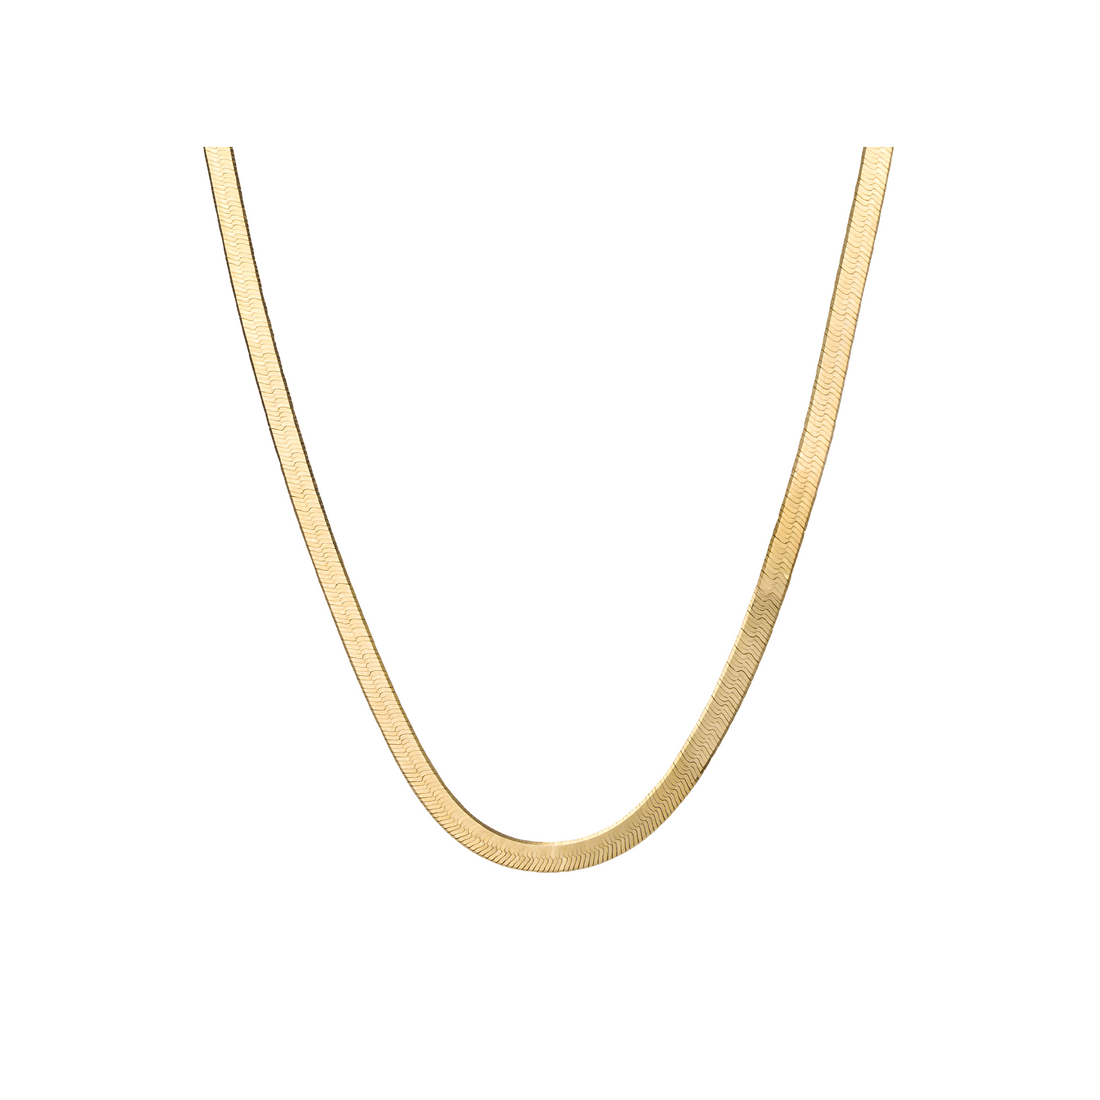 Herringbone Chain Necklace in 9ct Yellow Gold - Robert Anthony Jewellers, Edinburgh